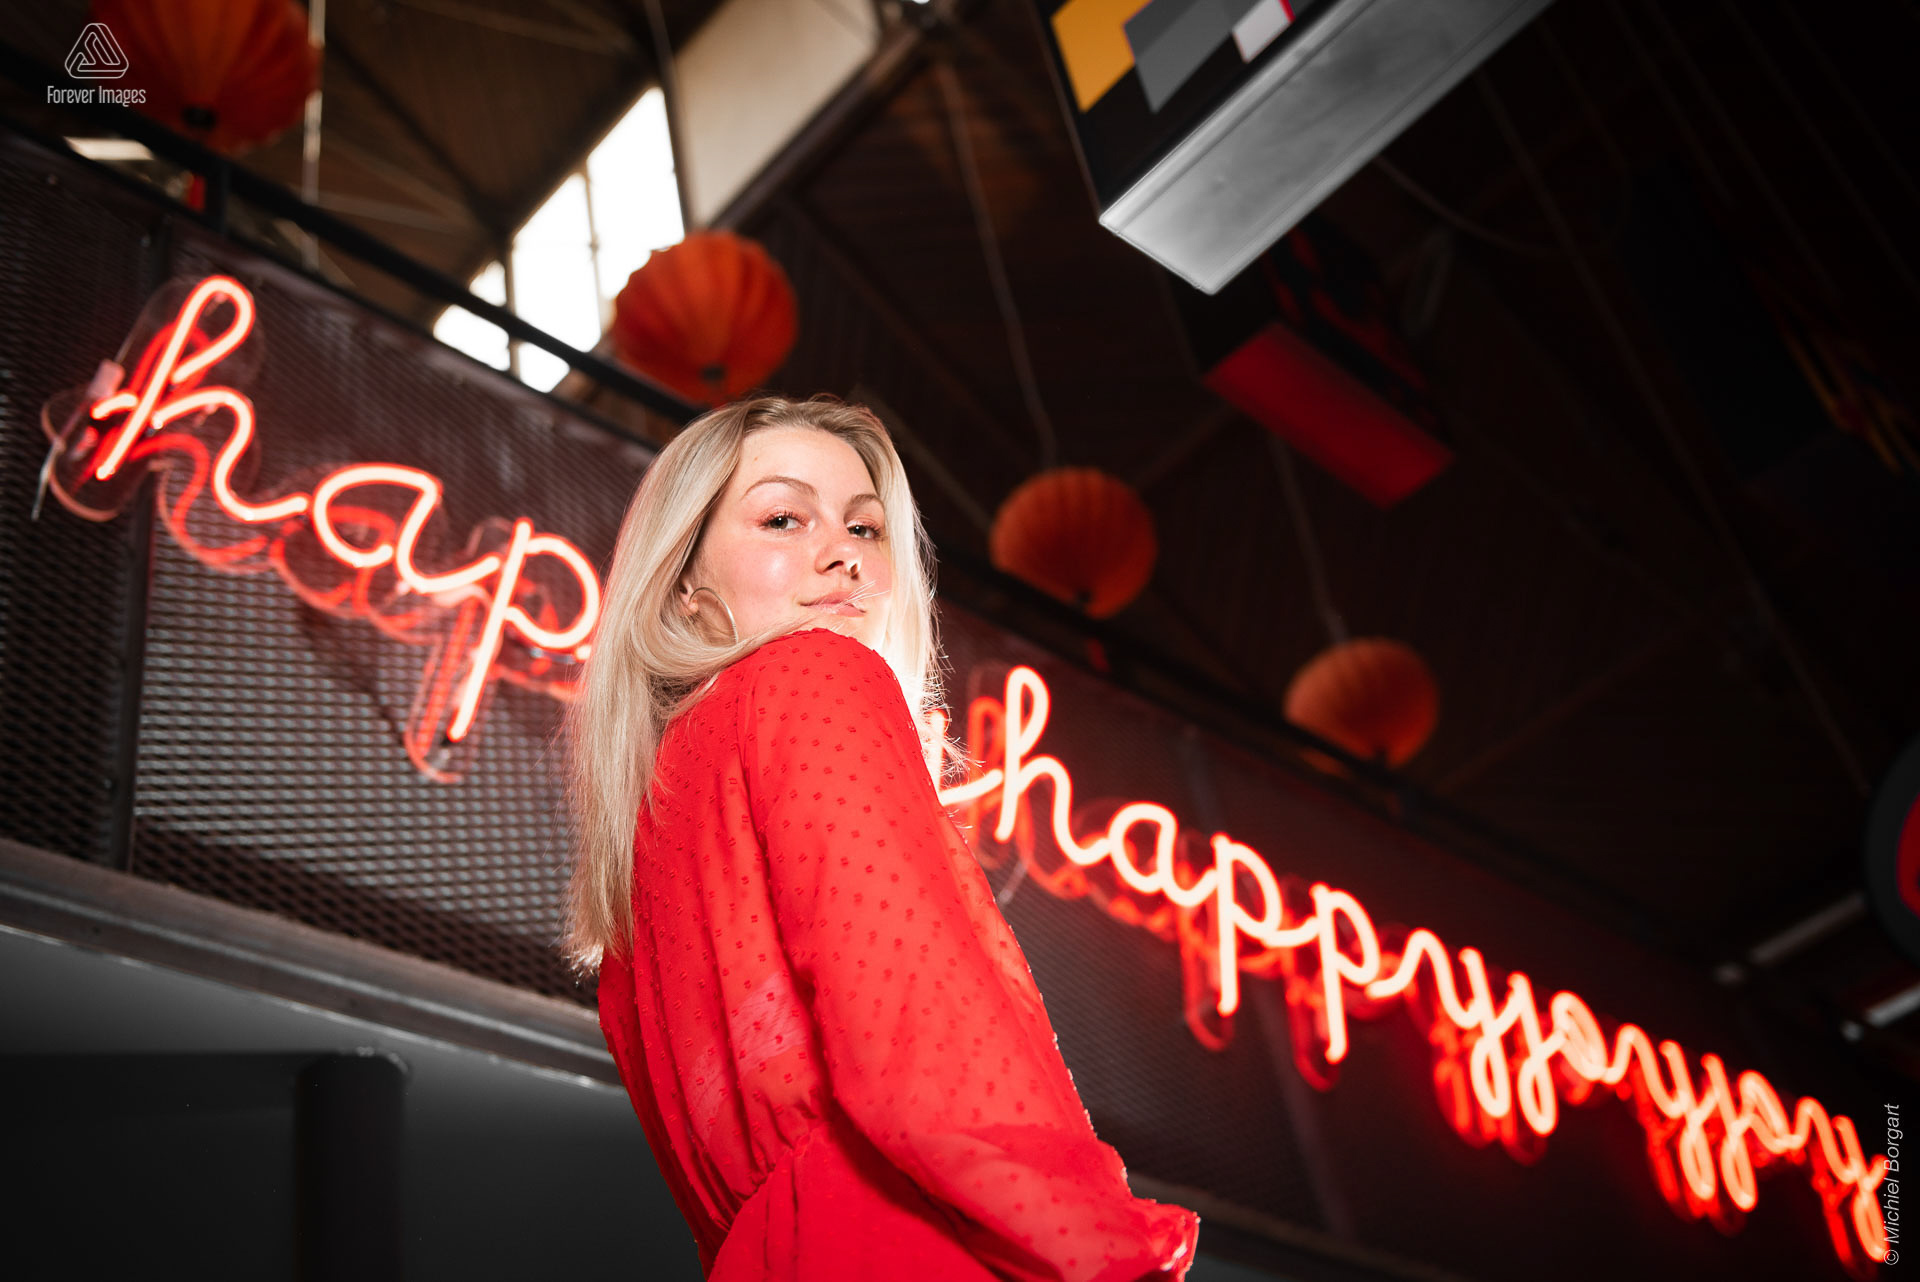 Portrait photo young lady in red dress in front of neon sign | Porscha Luna de Jong Happyhappyjoyjoy | Portrait Photographer Michiel Borgart - Forever Images.